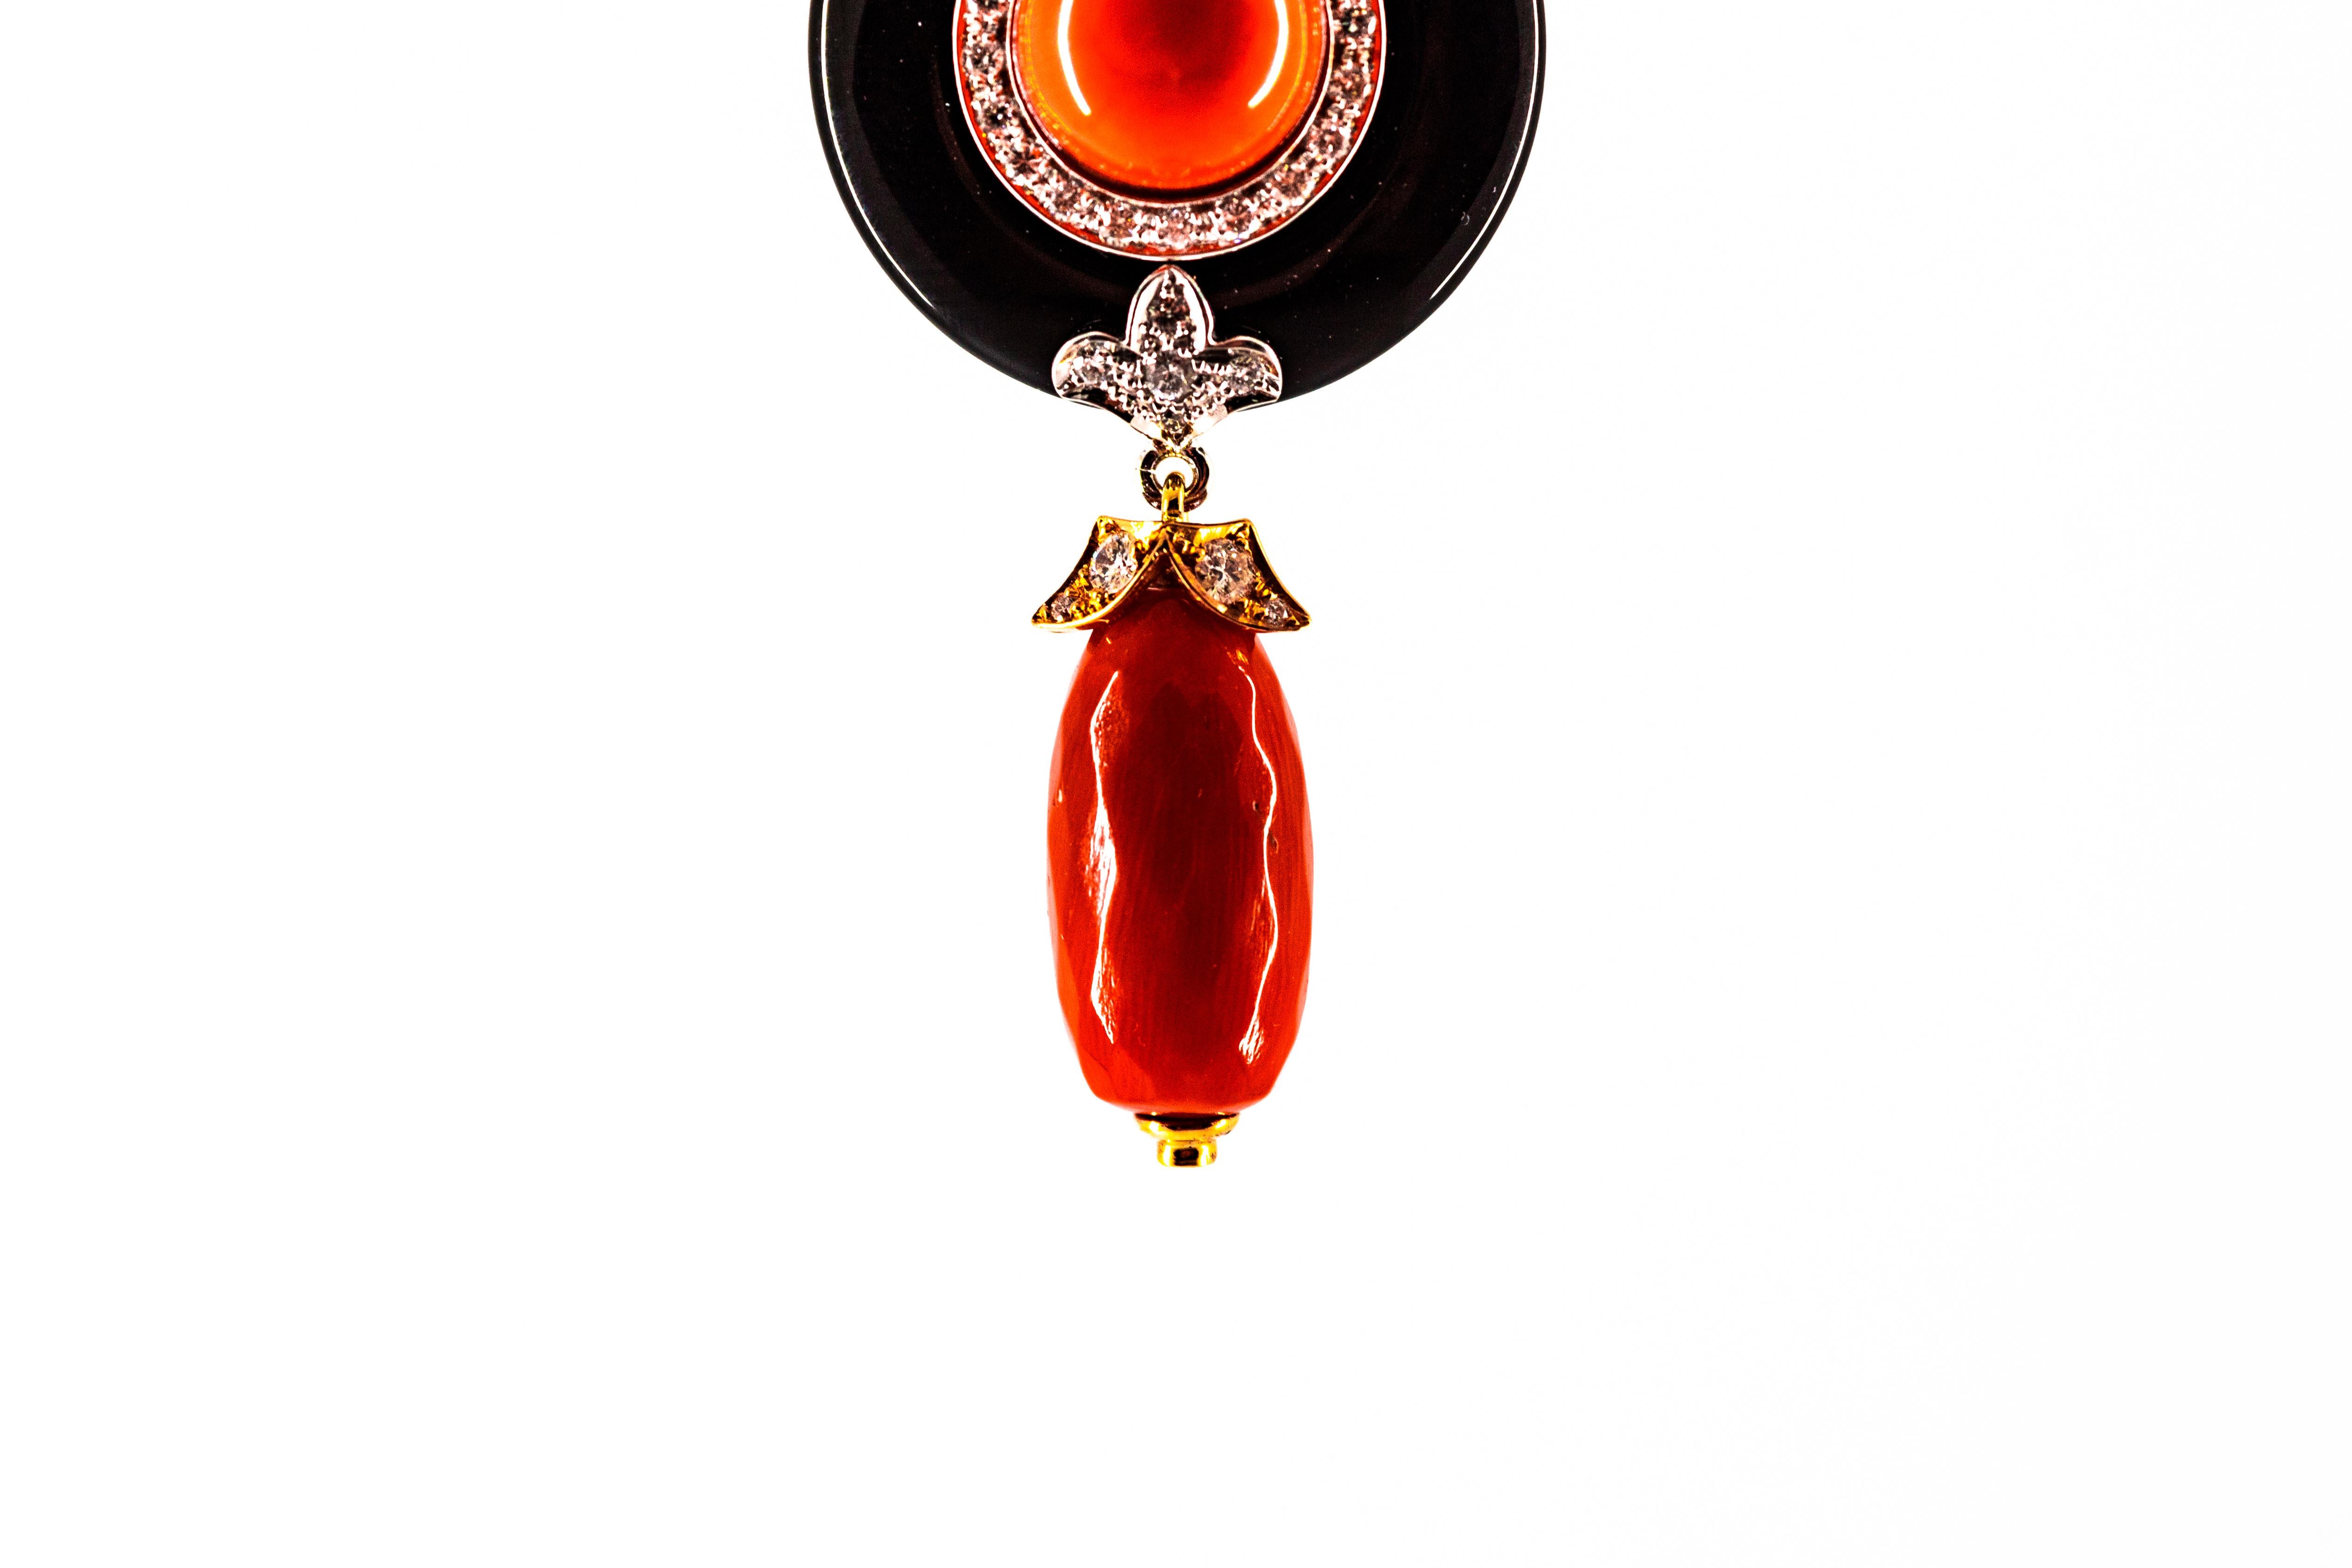 Brilliant Cut Art Deco Style Sardinia Red Coral White Diamond Onyx White Gold Pendant Necklace For Sale